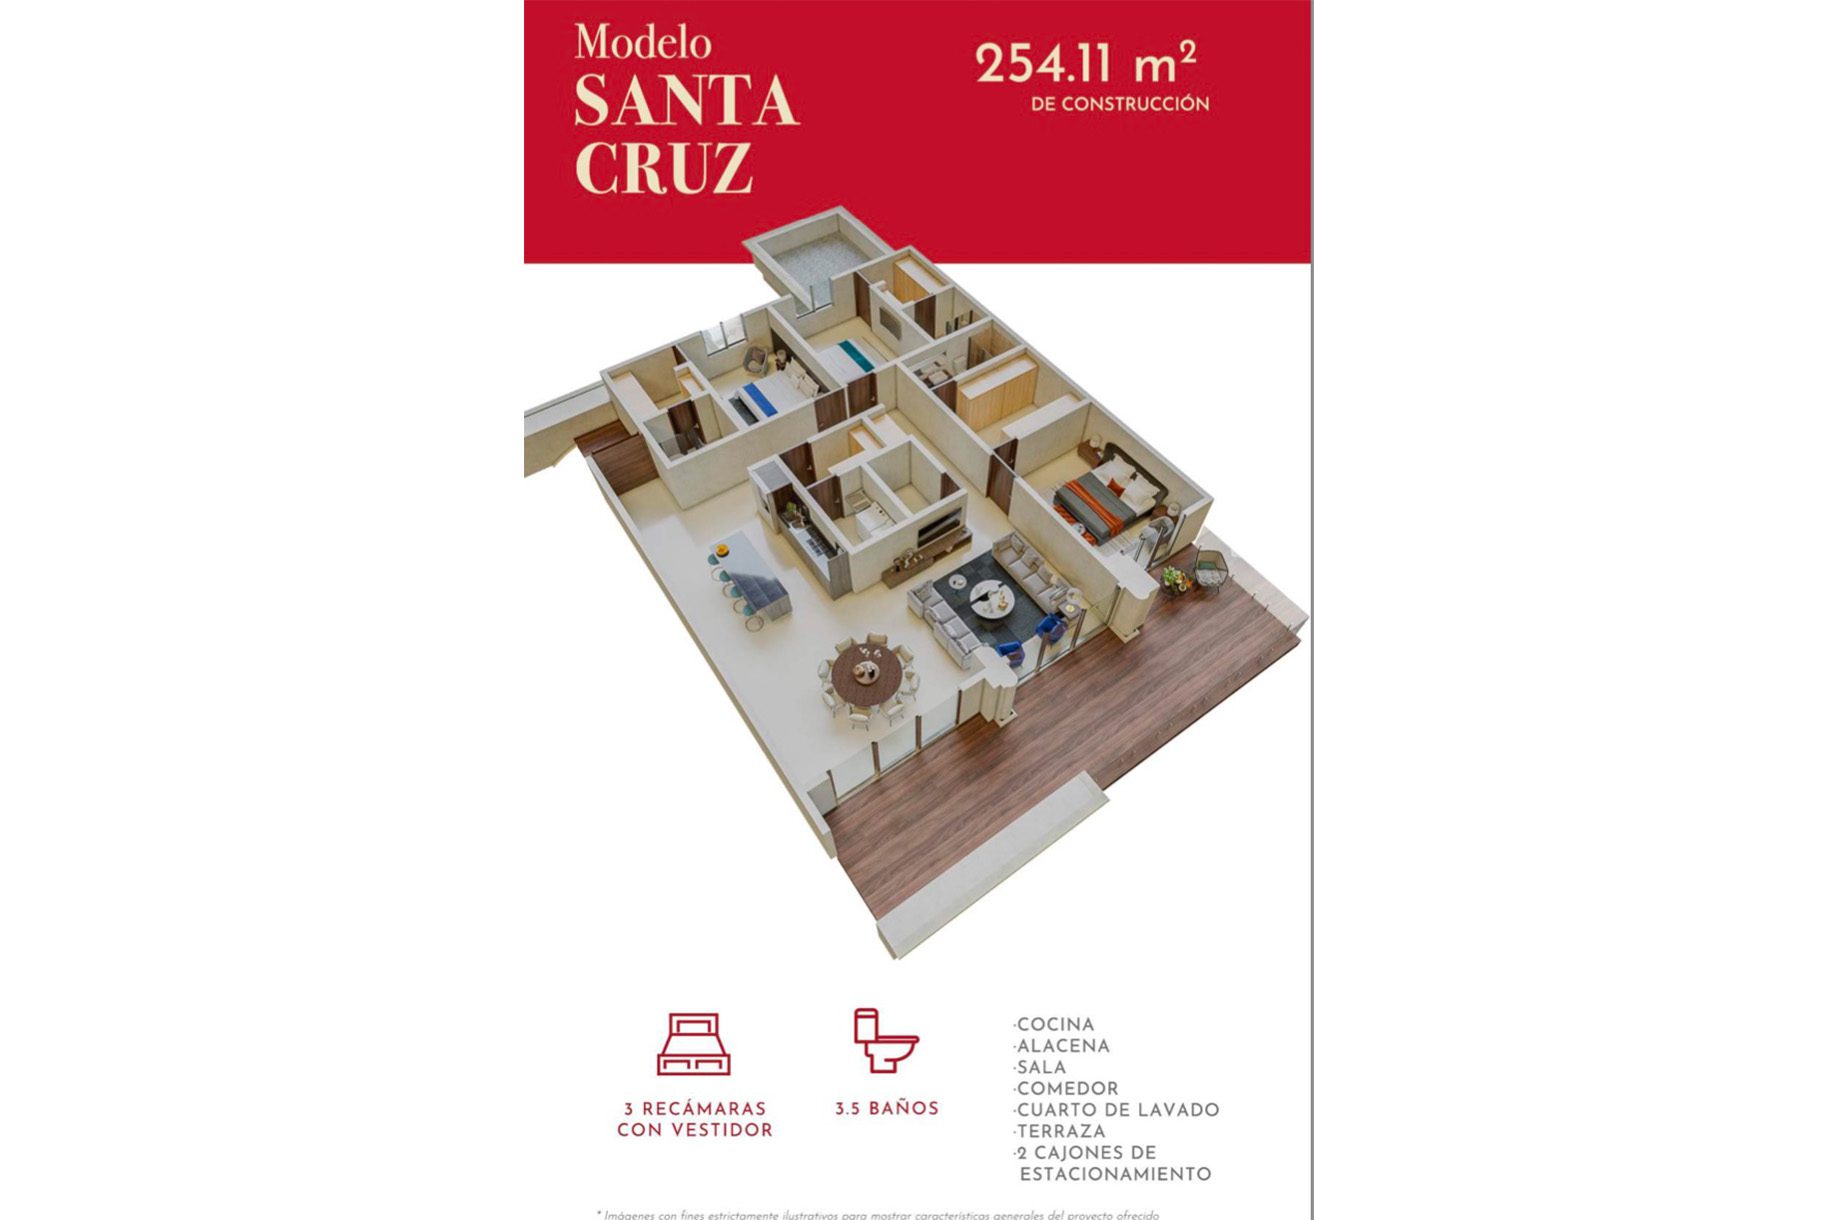 Modelo Santa Cruz